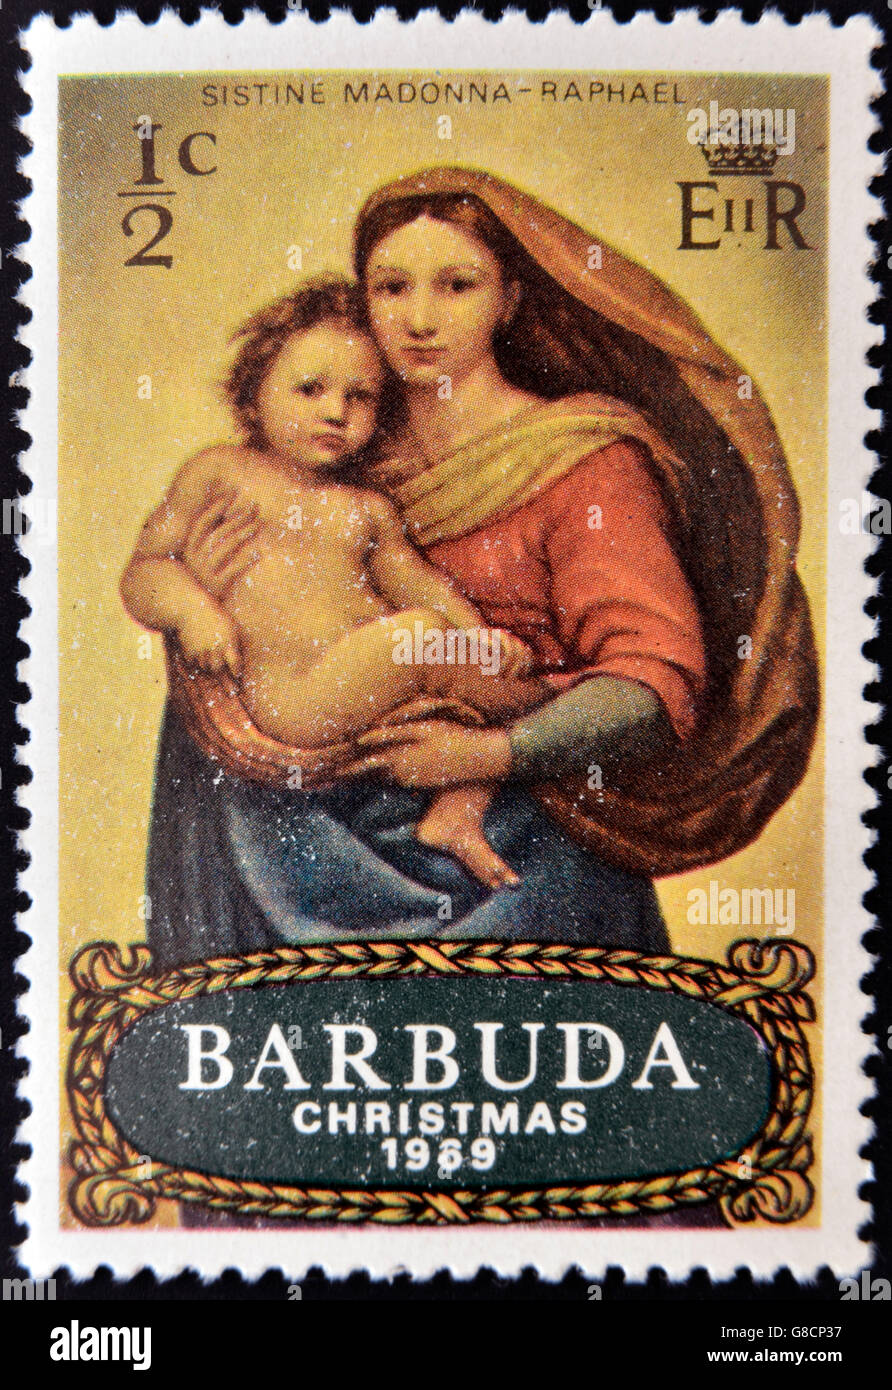 BARBUDA - CIRCA 1989: A stamp printed in Barbuda shows The Sistine Madonna by Raphael, circa 1989 Stock Photo